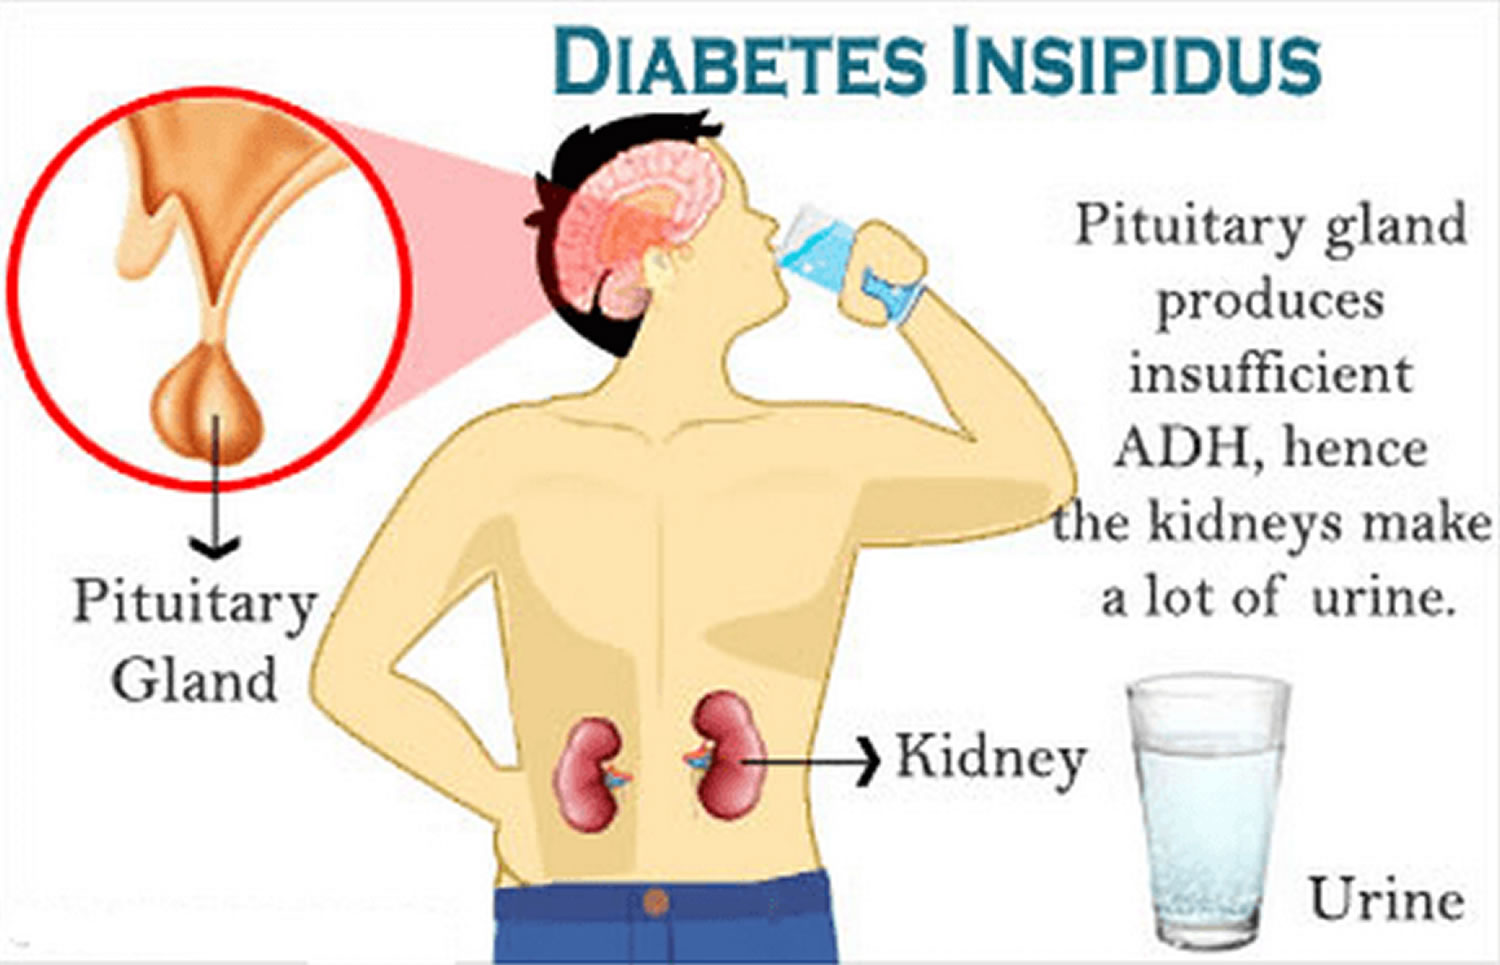 diabetes insipidus test at home)